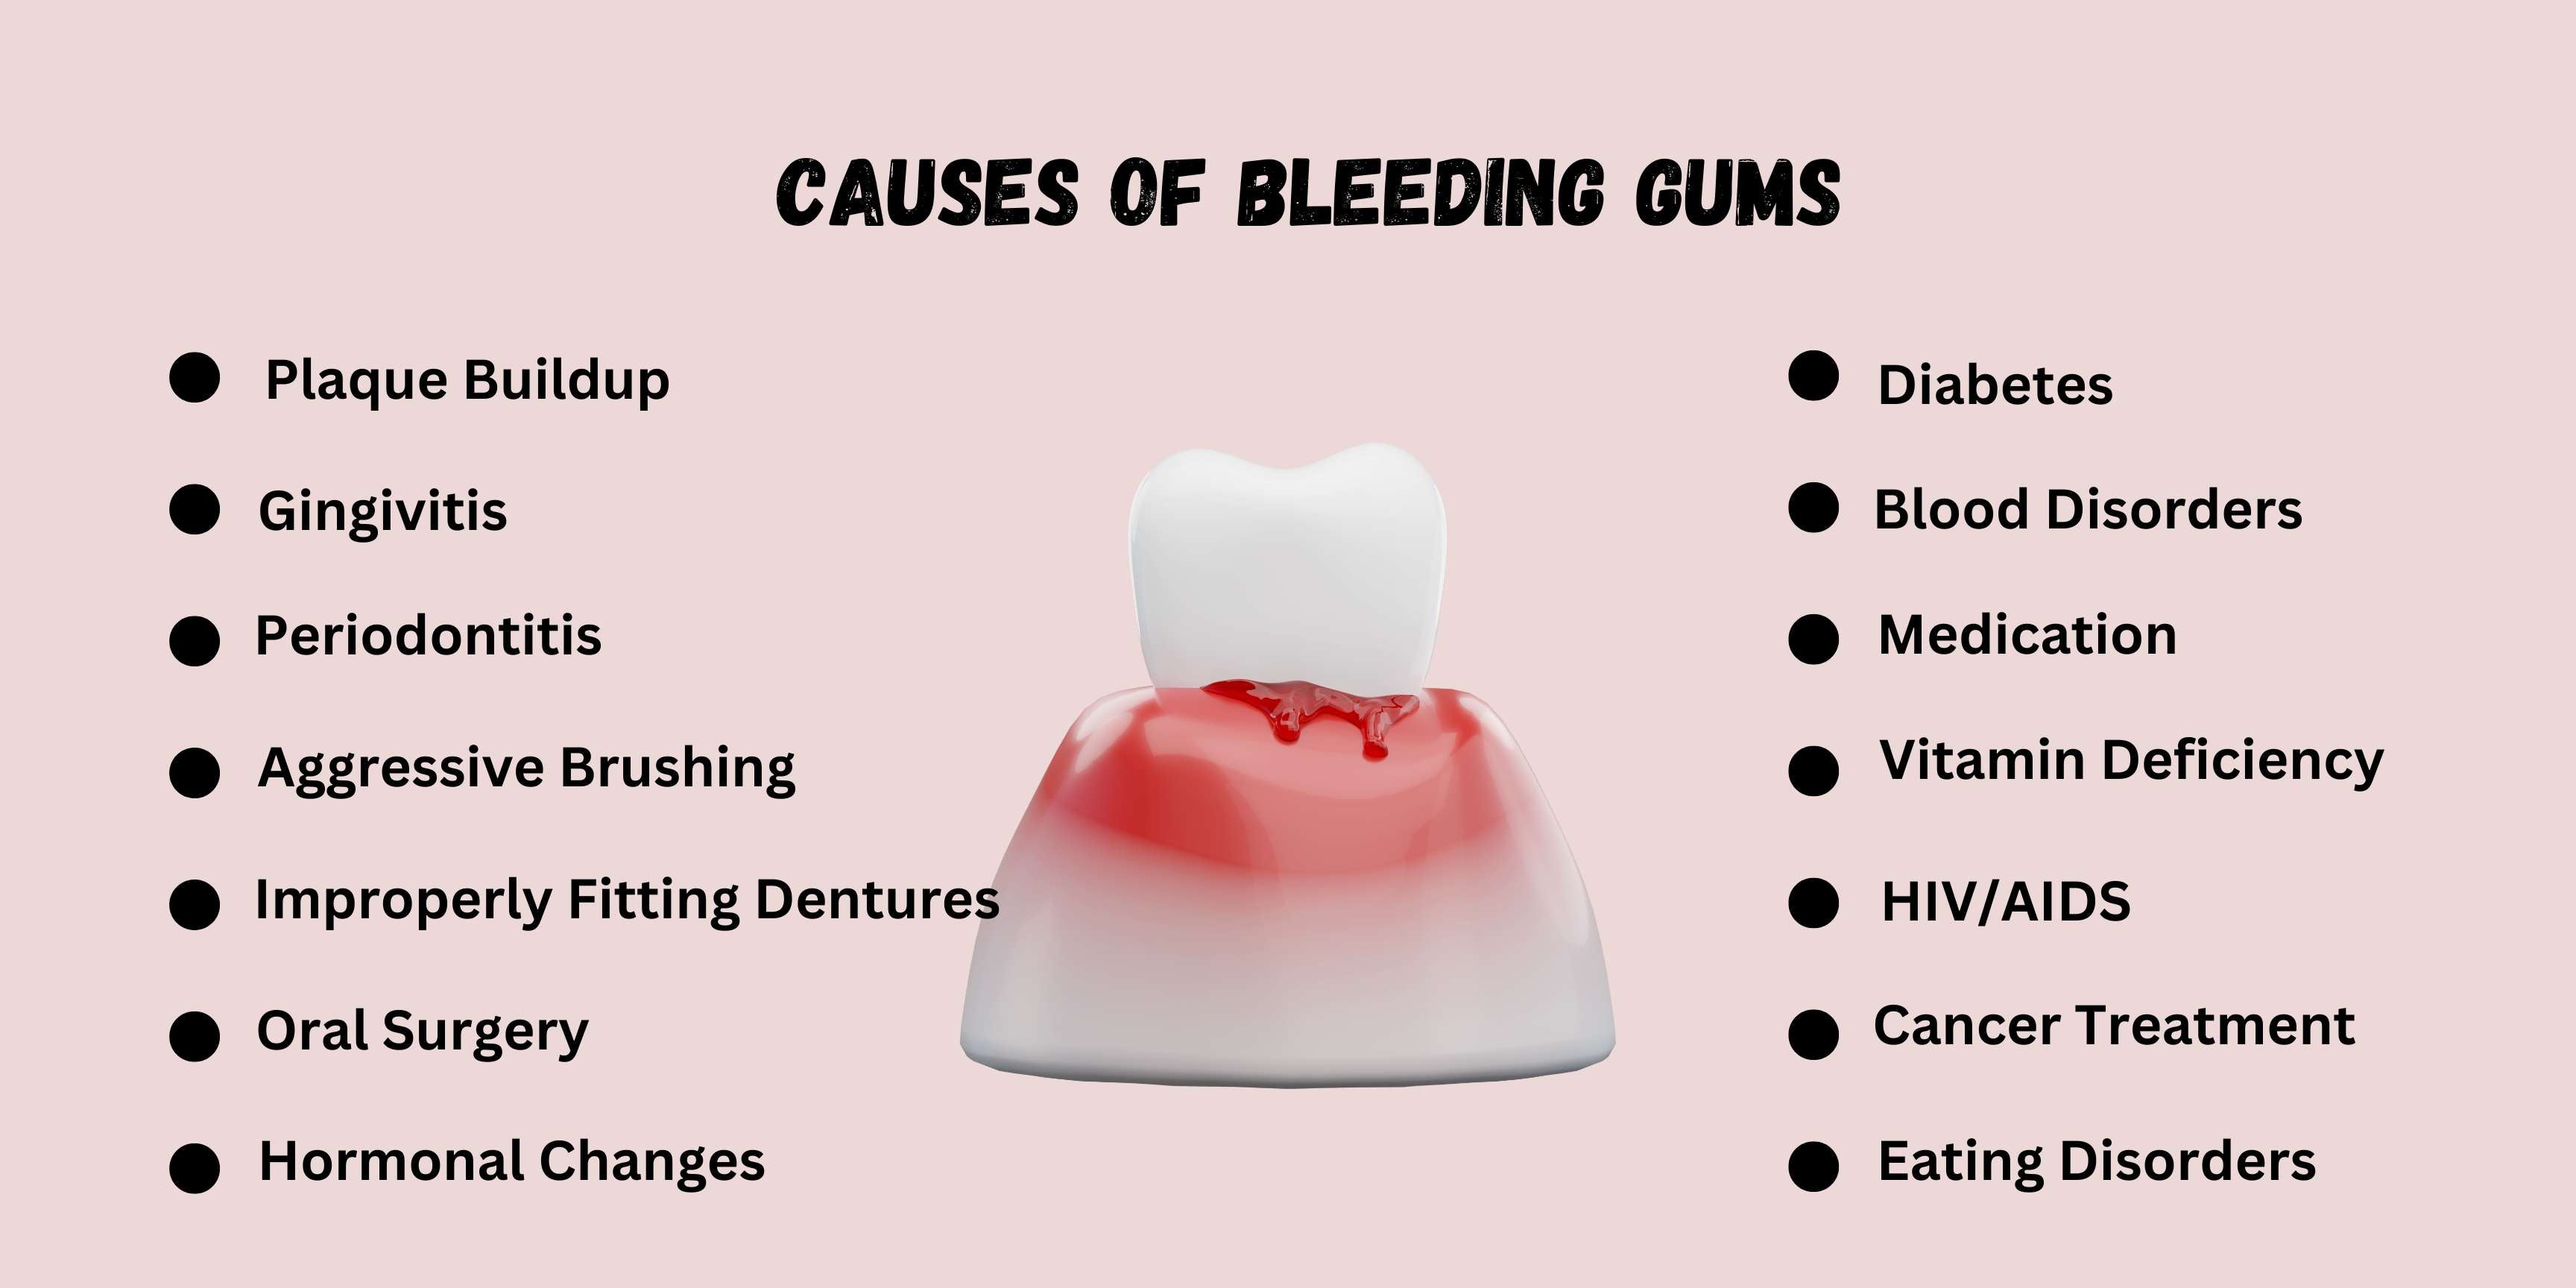 Causes of Bleeding Gums